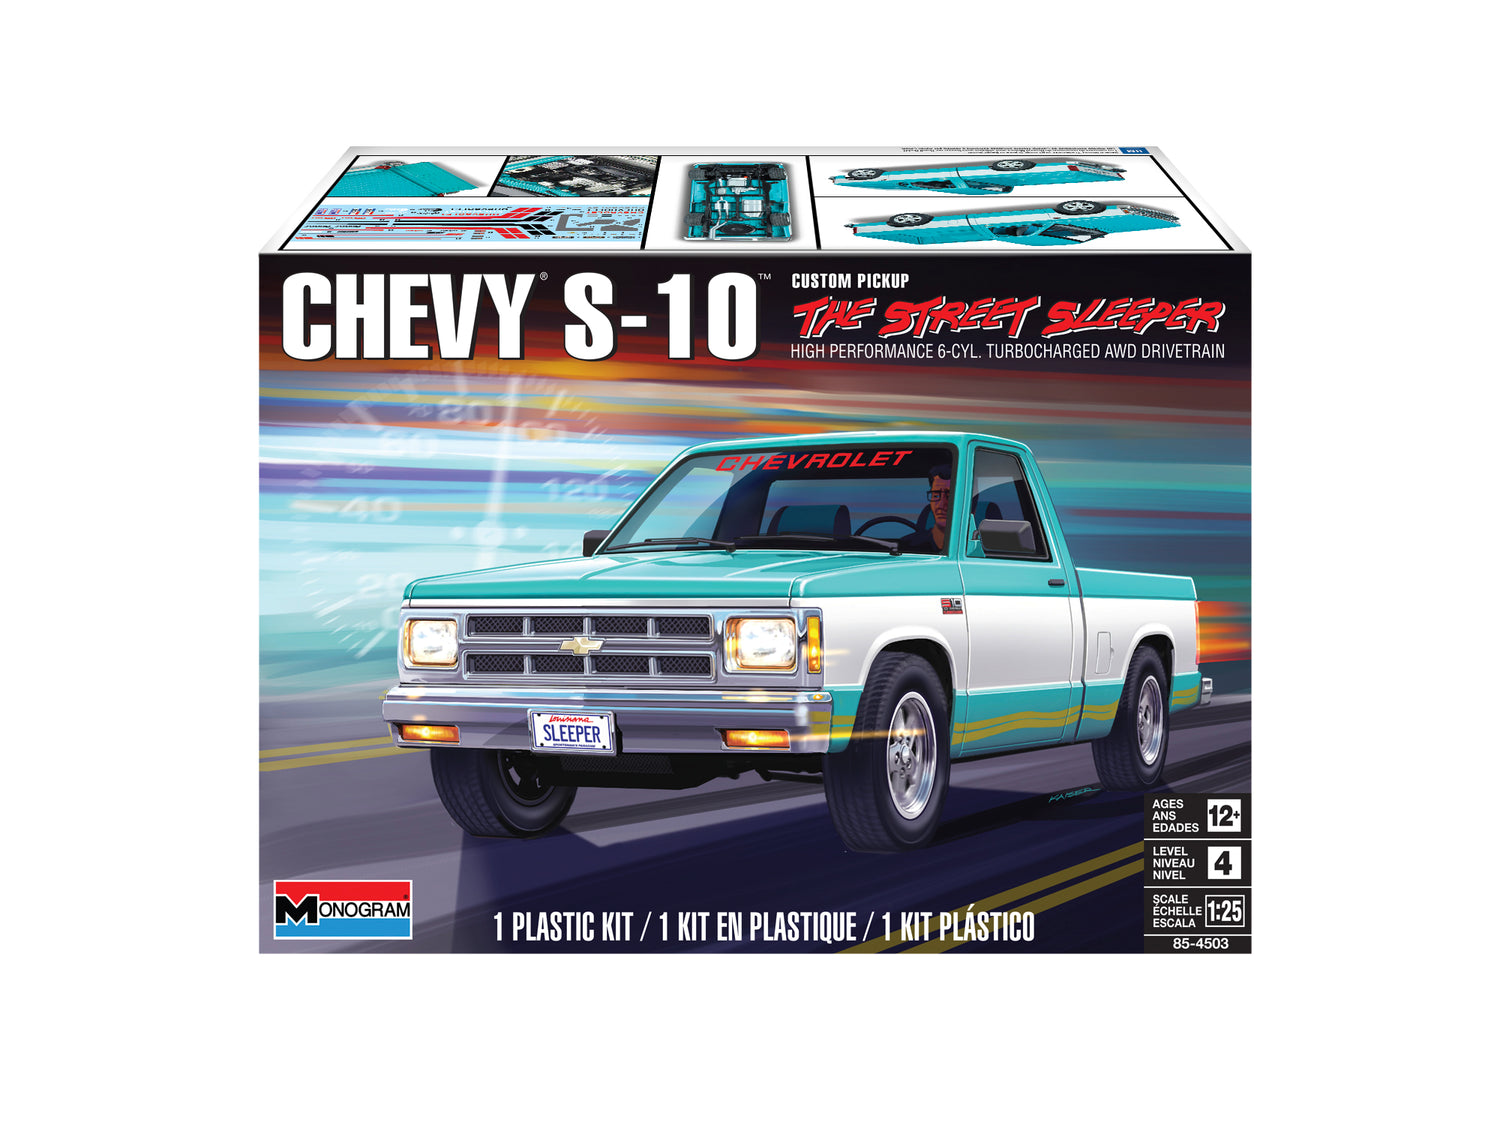 Monogram Chevy S-10 Custom Pickup 1:25 Scale Model Kit